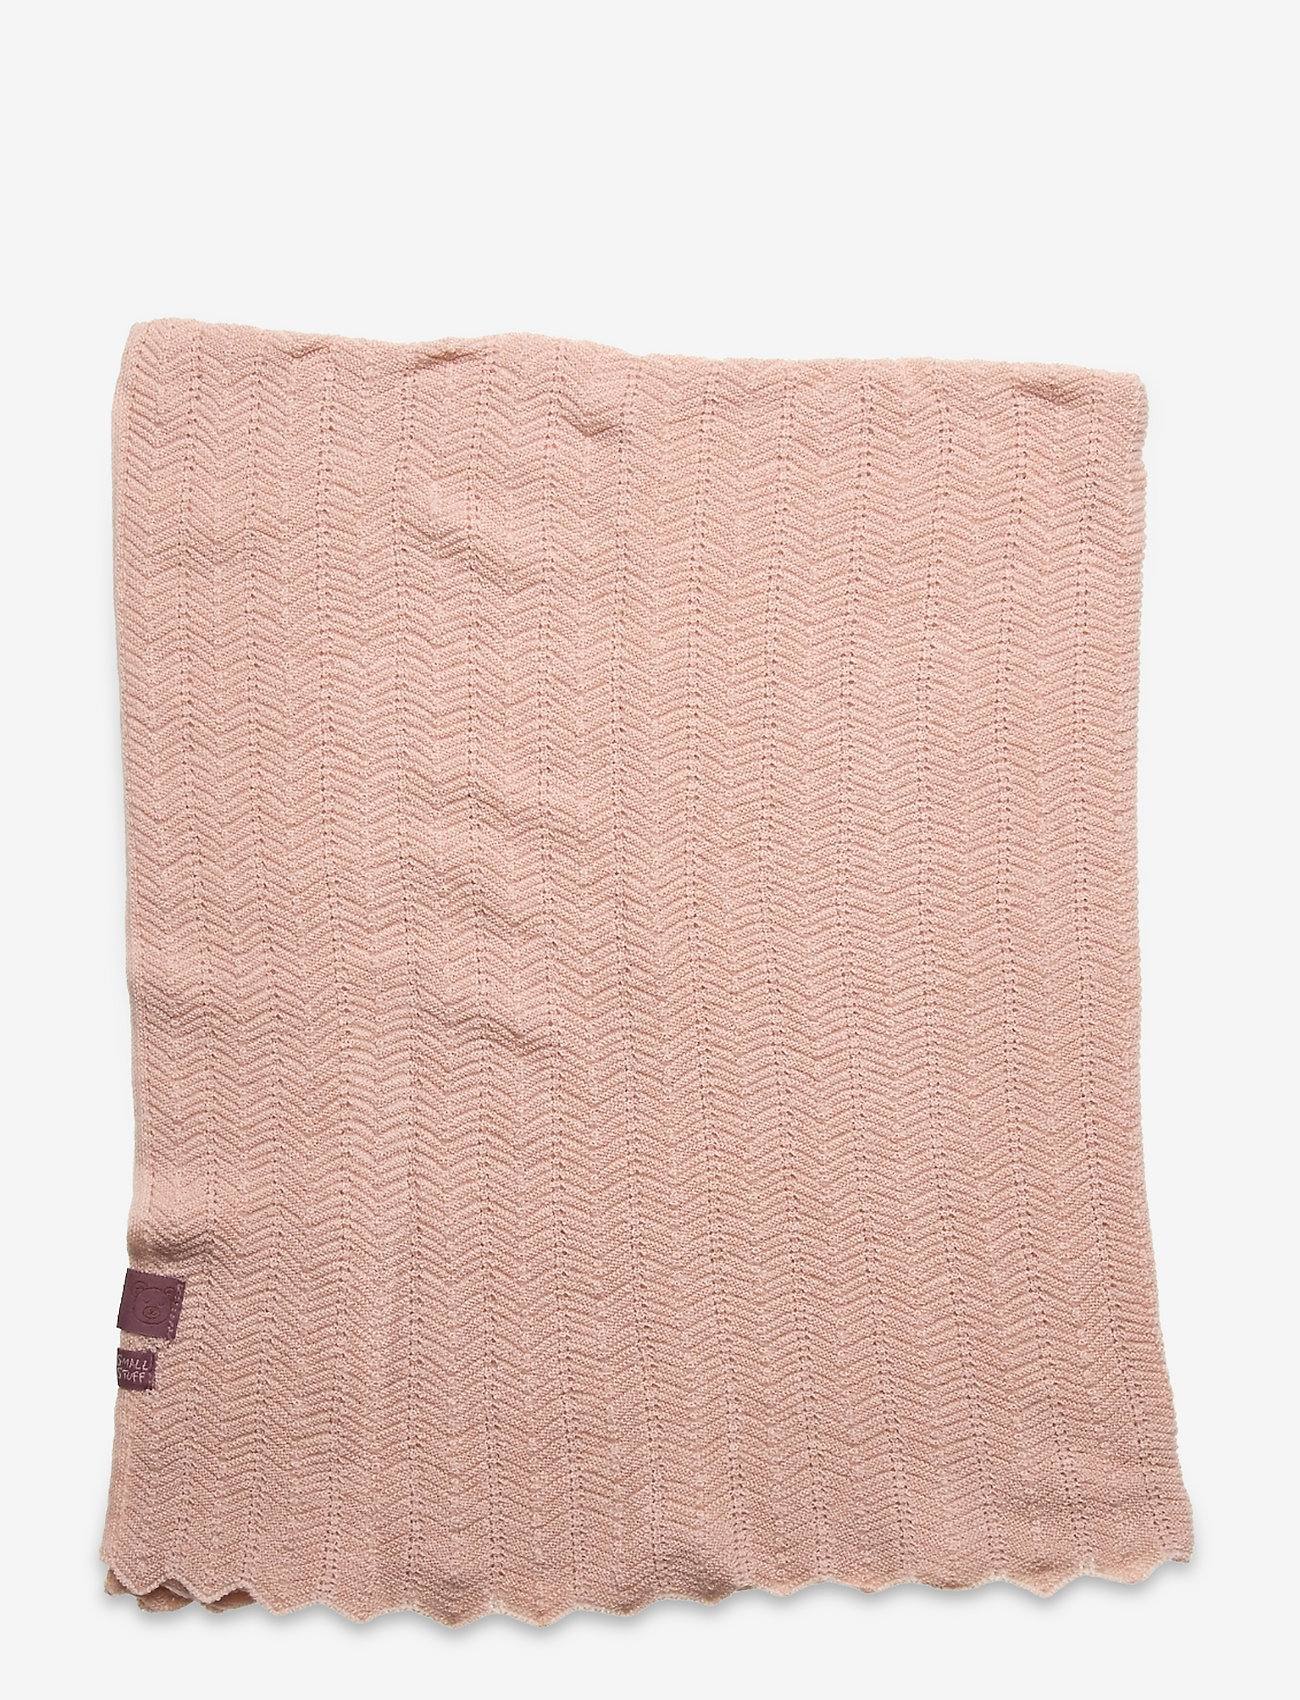 Smallstuff - Baby blanket, fishbone merino WOOL, soft rose - schlafen - soft rose - 1